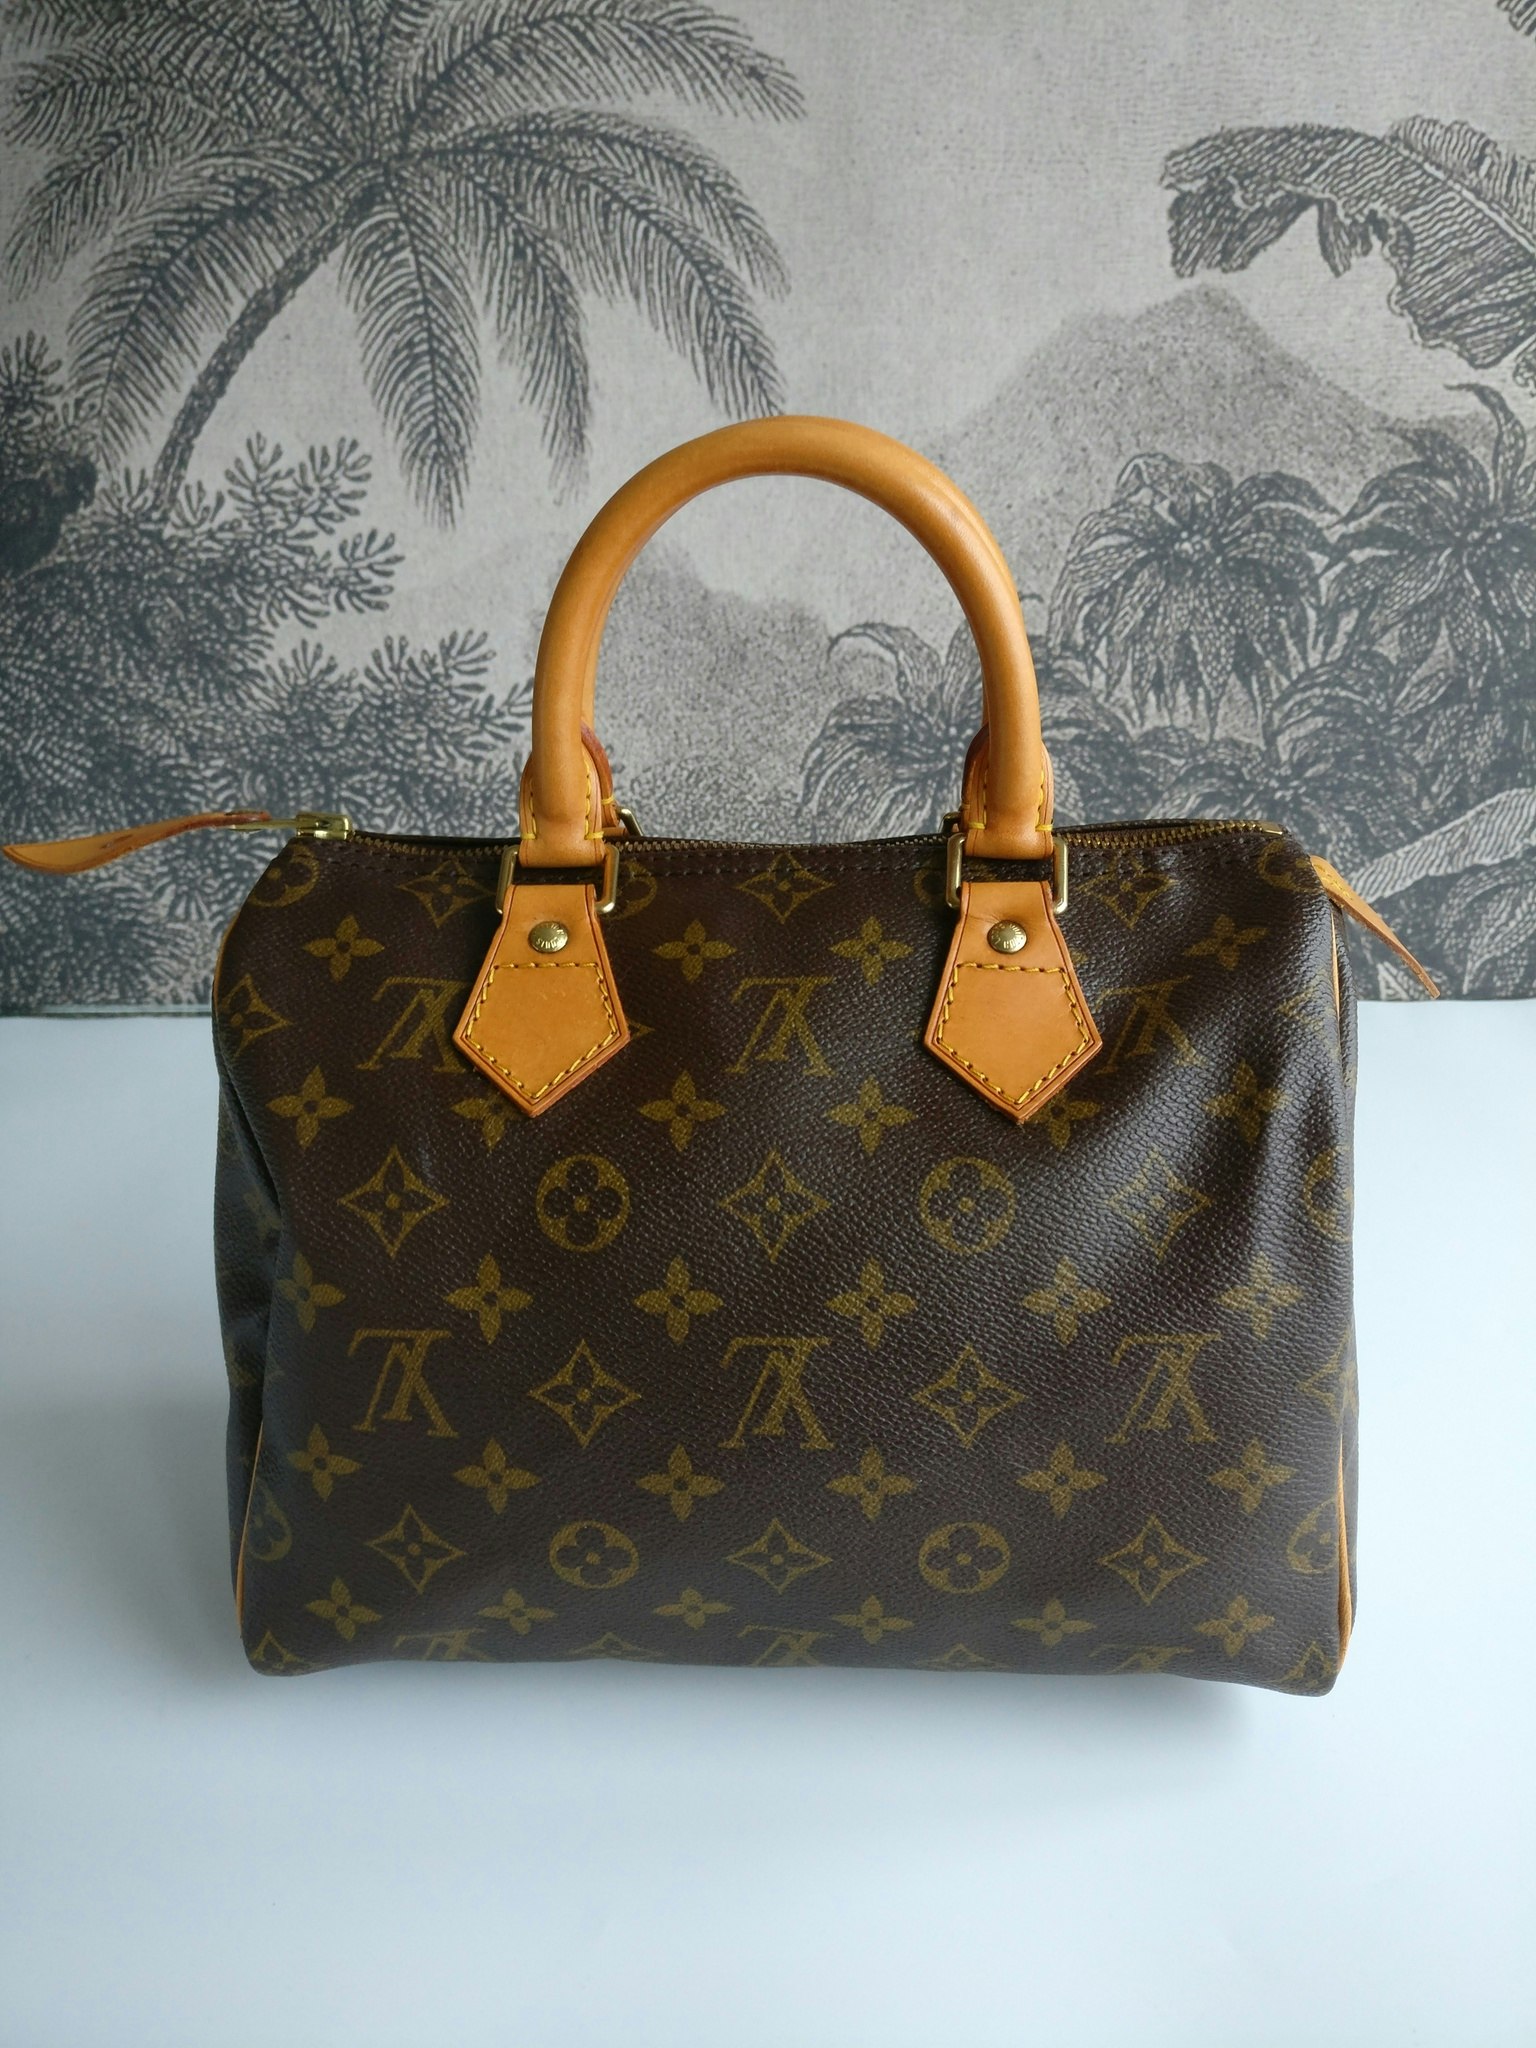 Louis Vuitton Speedy 25 - Good or Bag